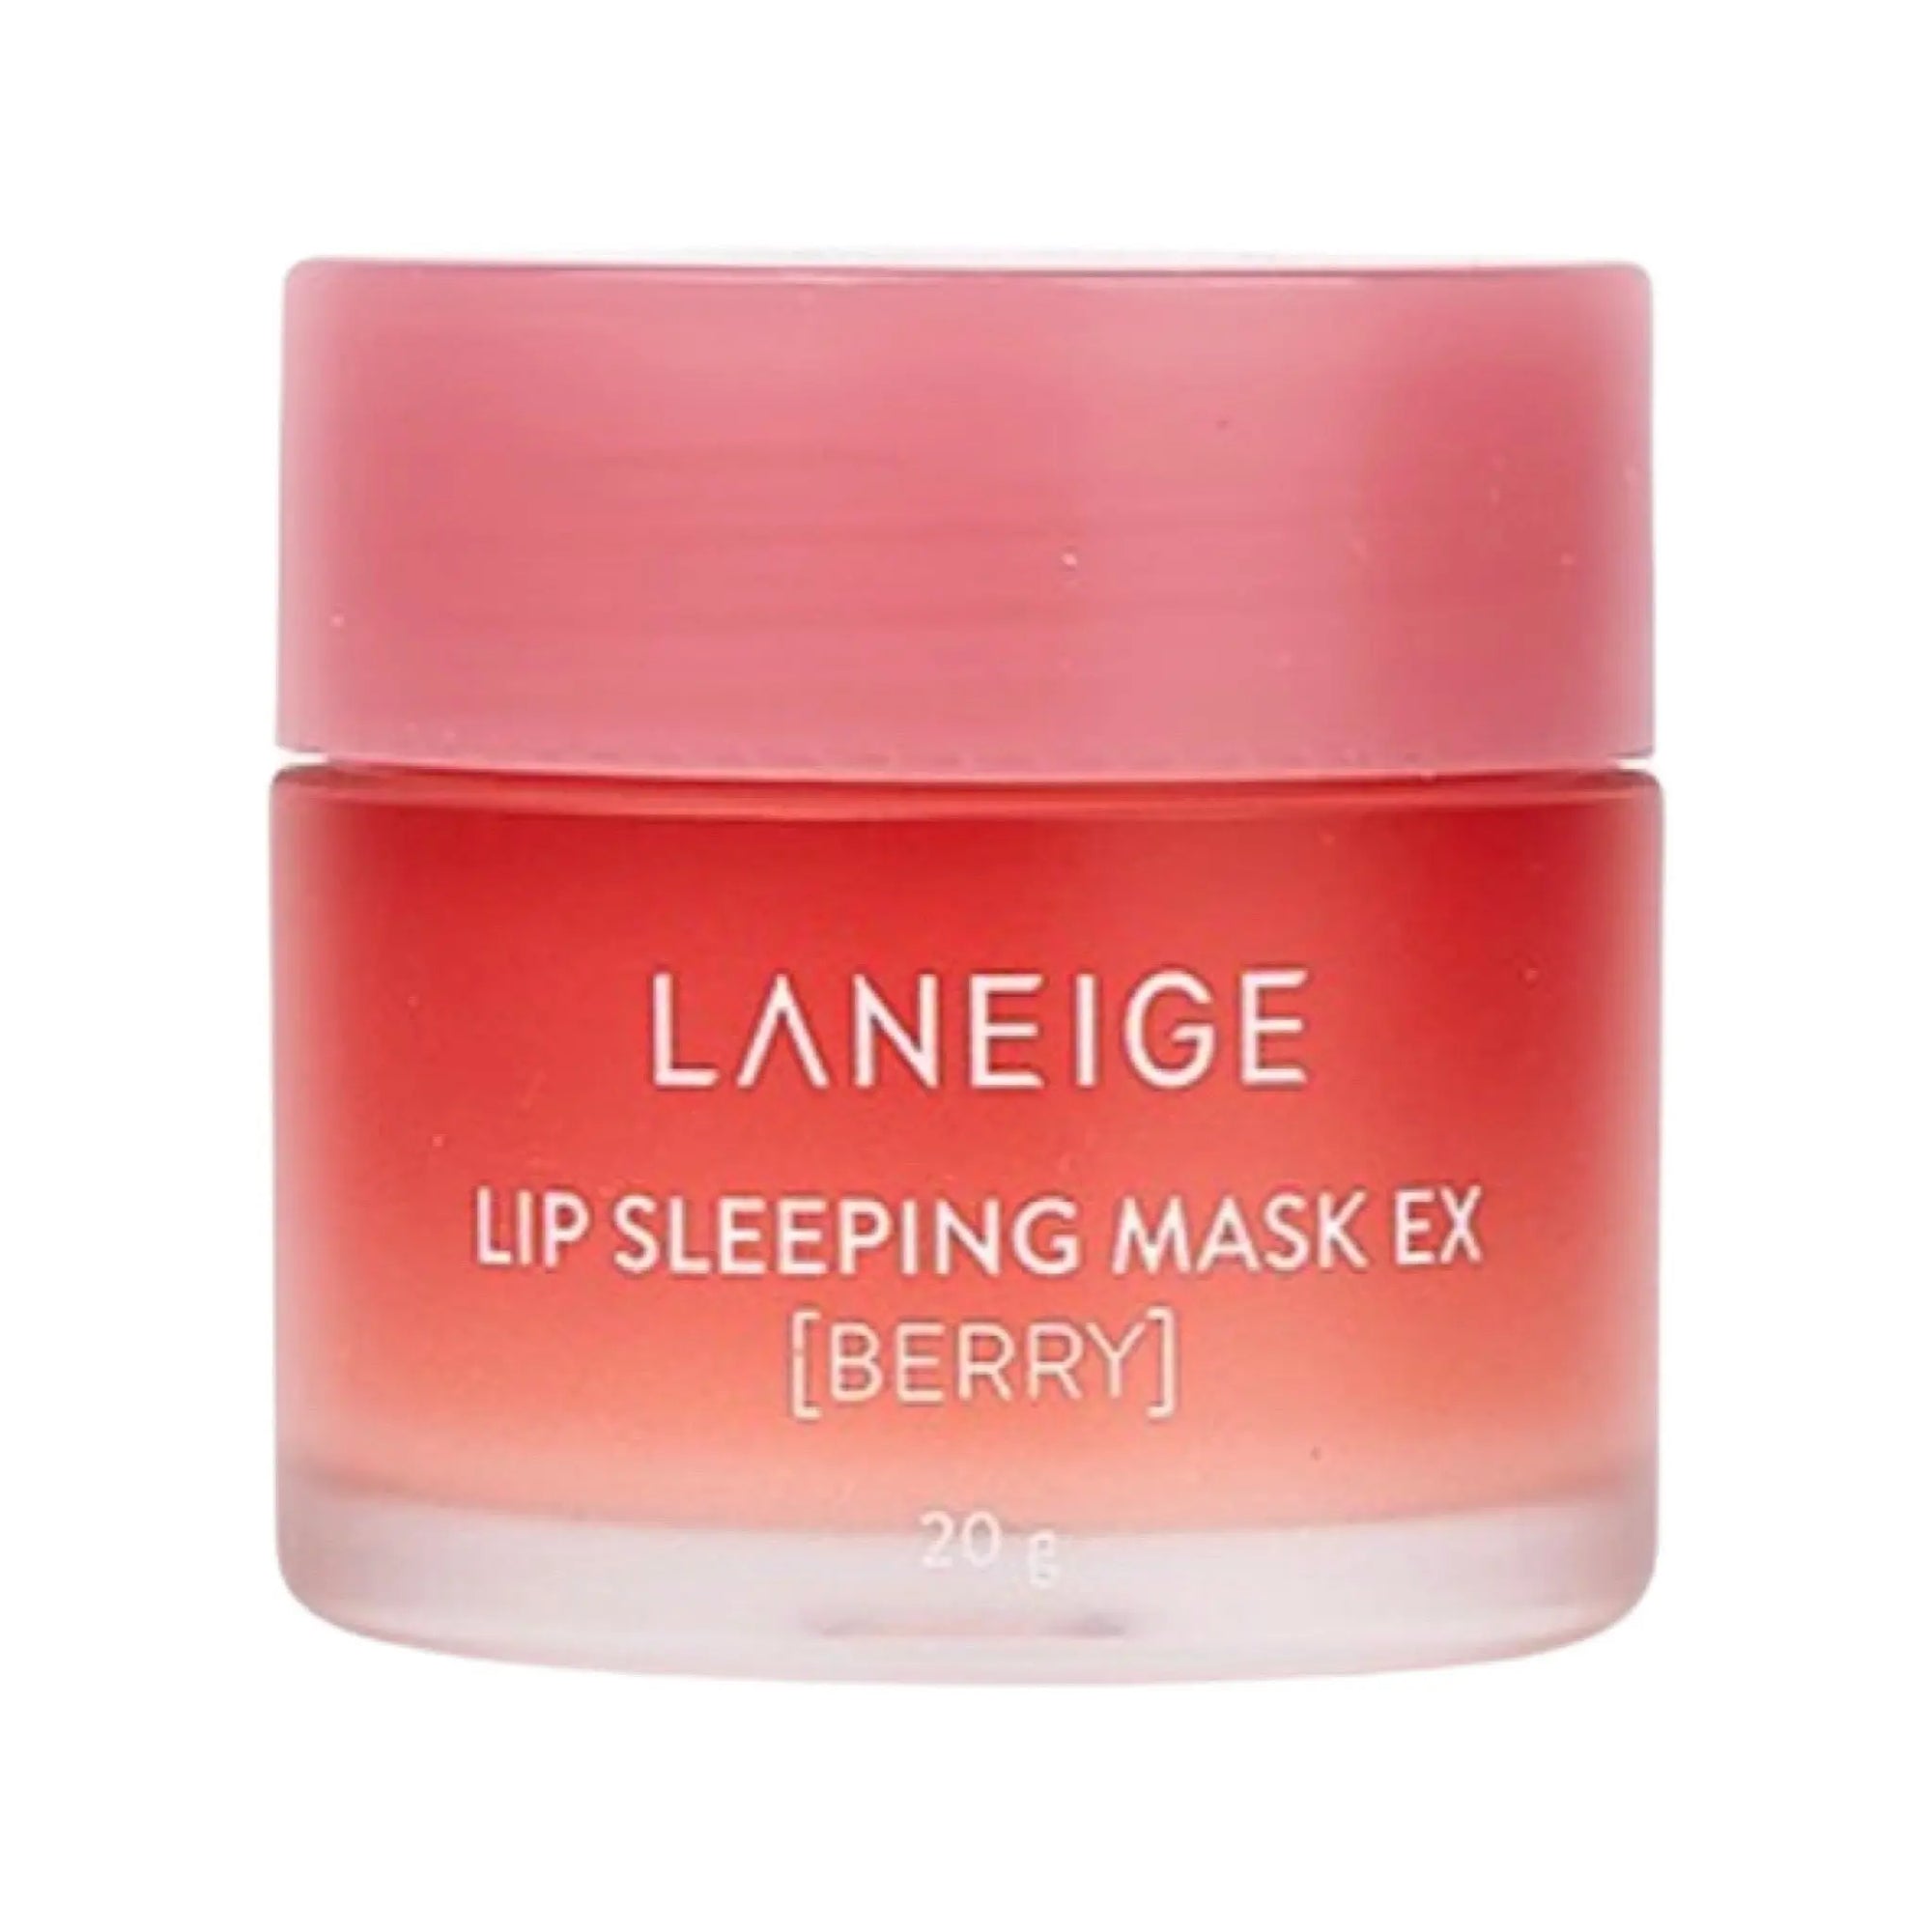 Laneige - Lip Sleeping Mask EX (Berry) 20g Laneige